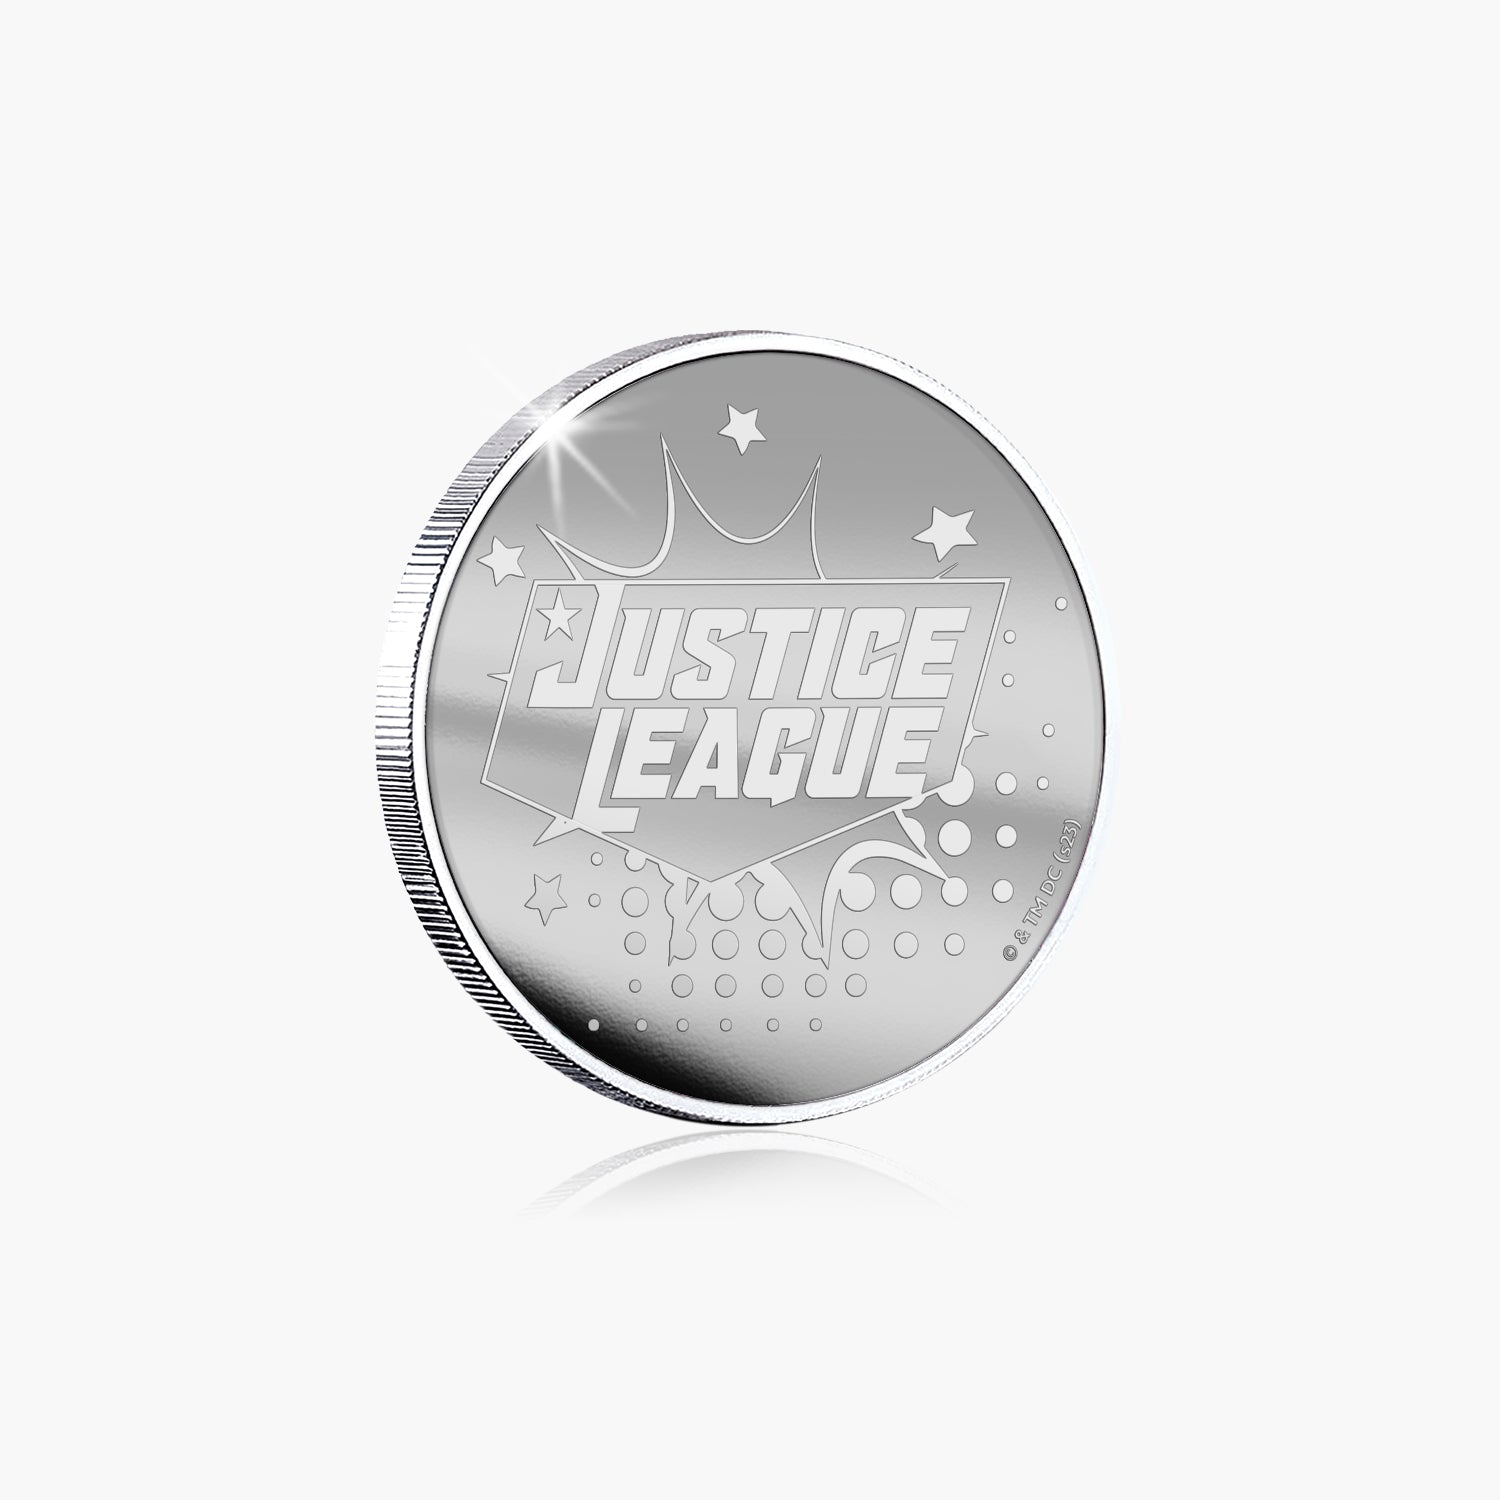 Justice League - Wonder Woman Silver Plated Commemorative